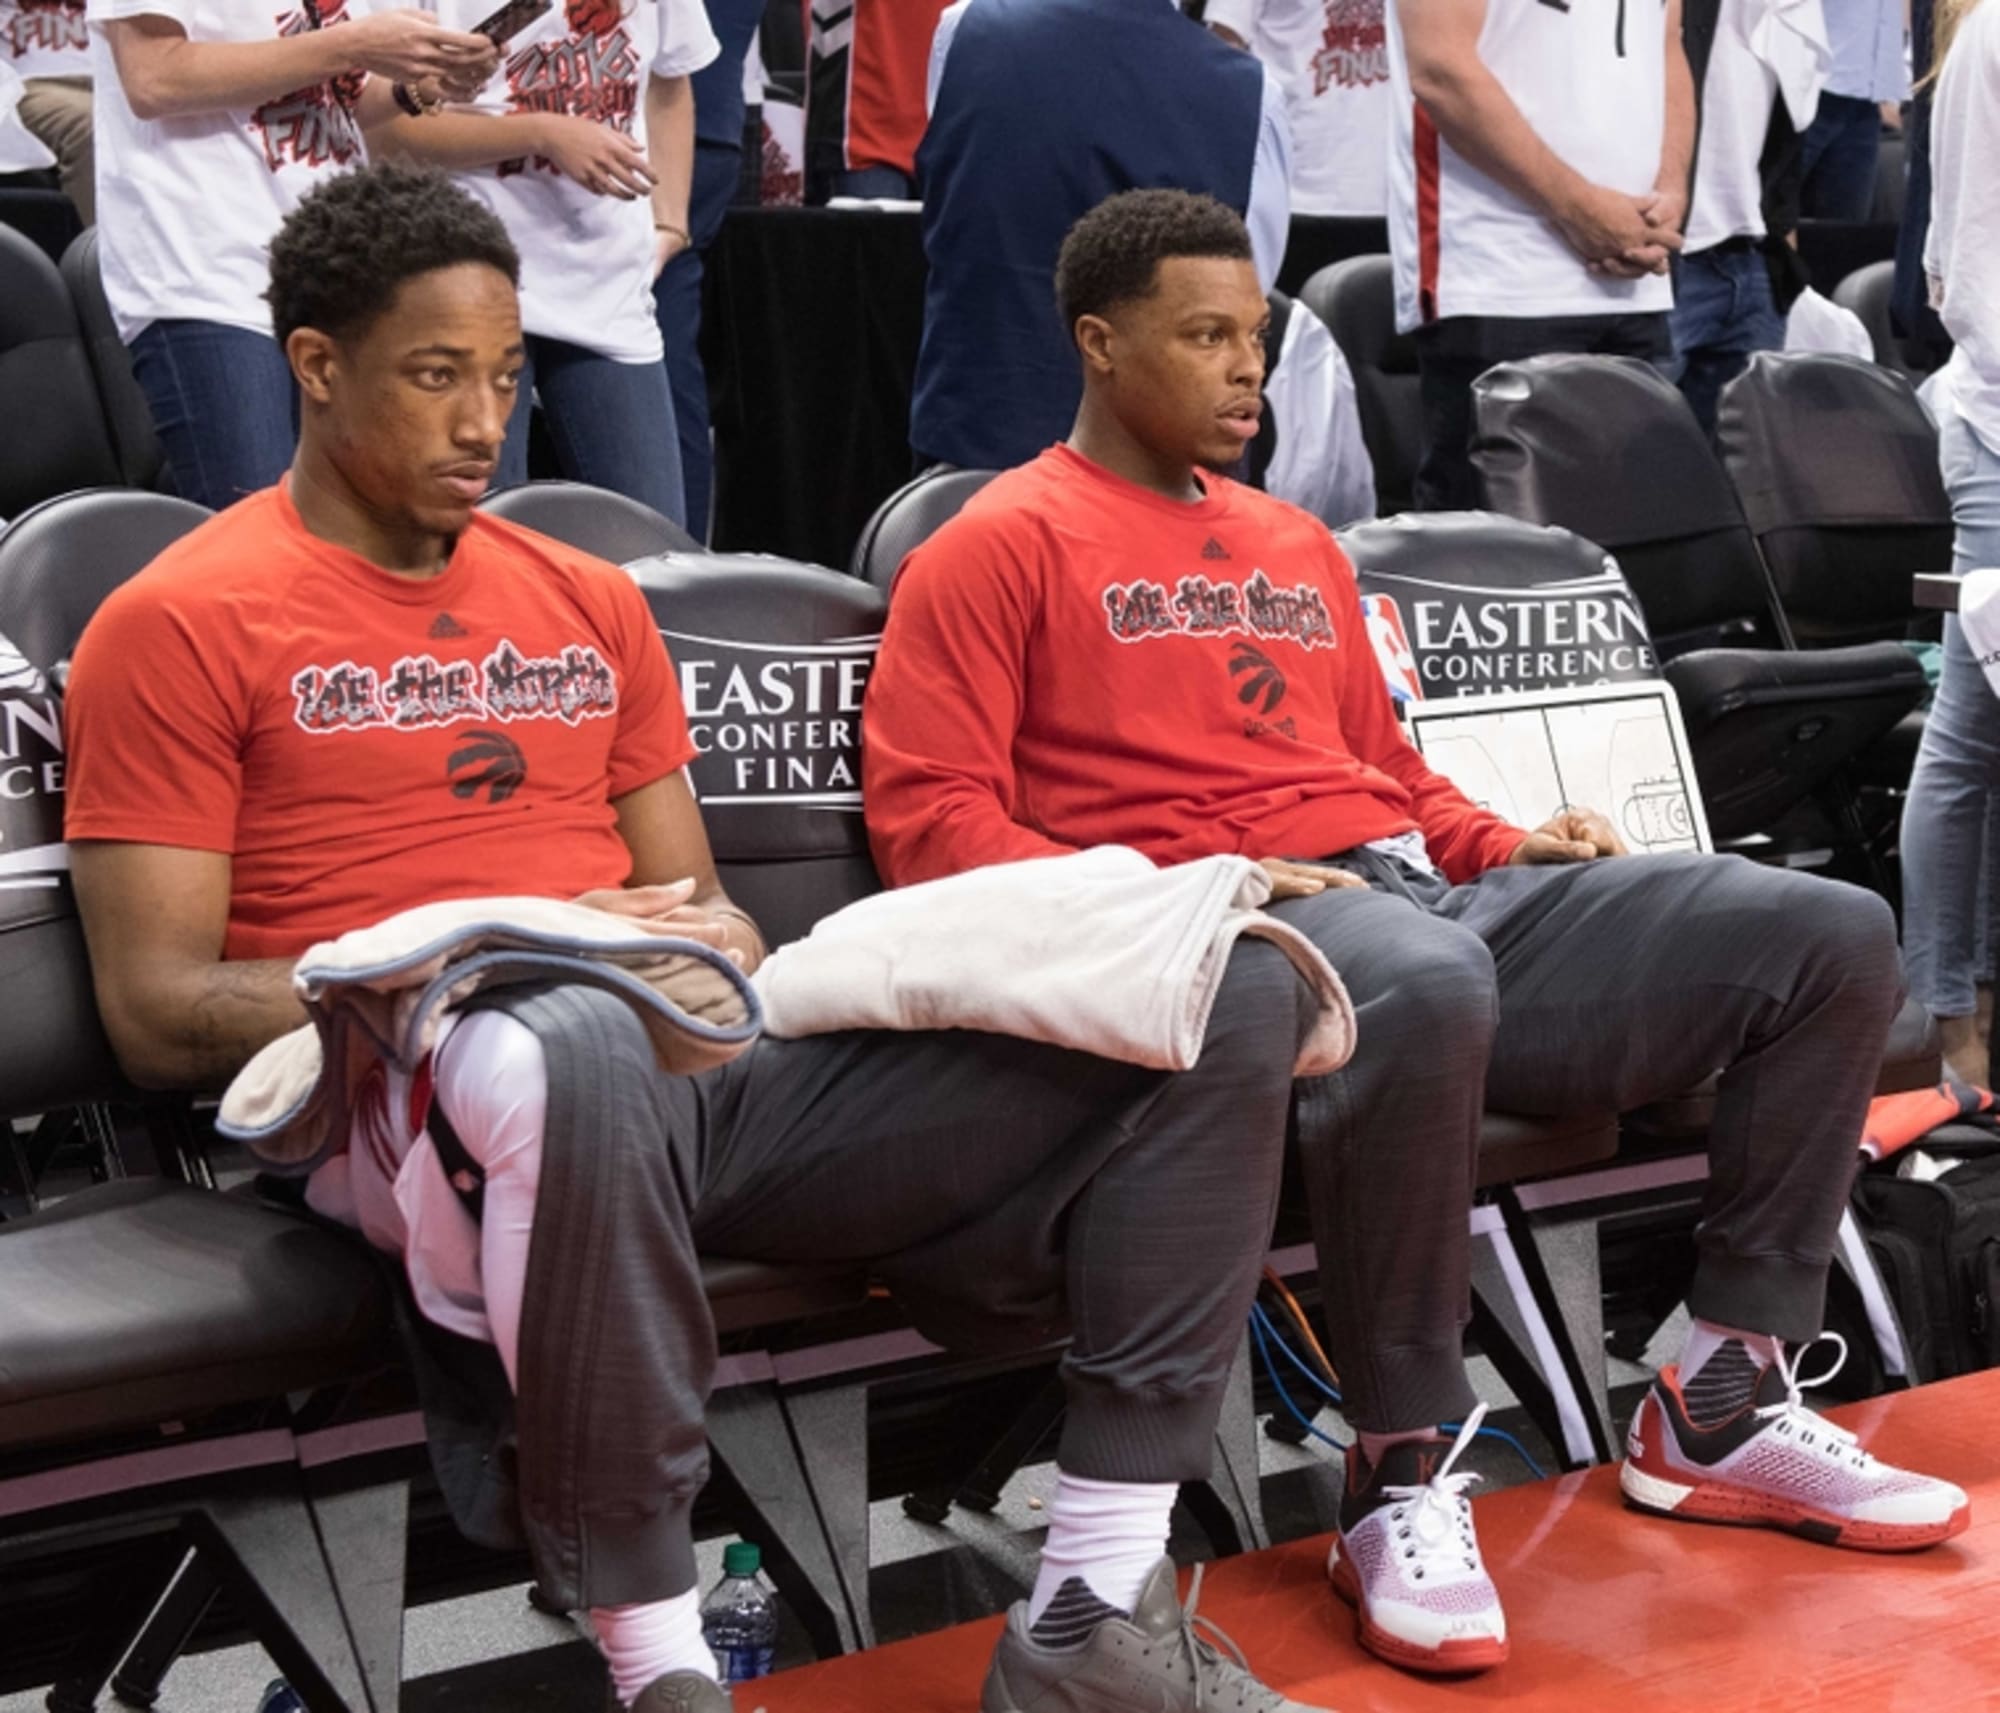 Toronto Raptors: Can DeMar DeRozan Make the Next Leap Toward NBA